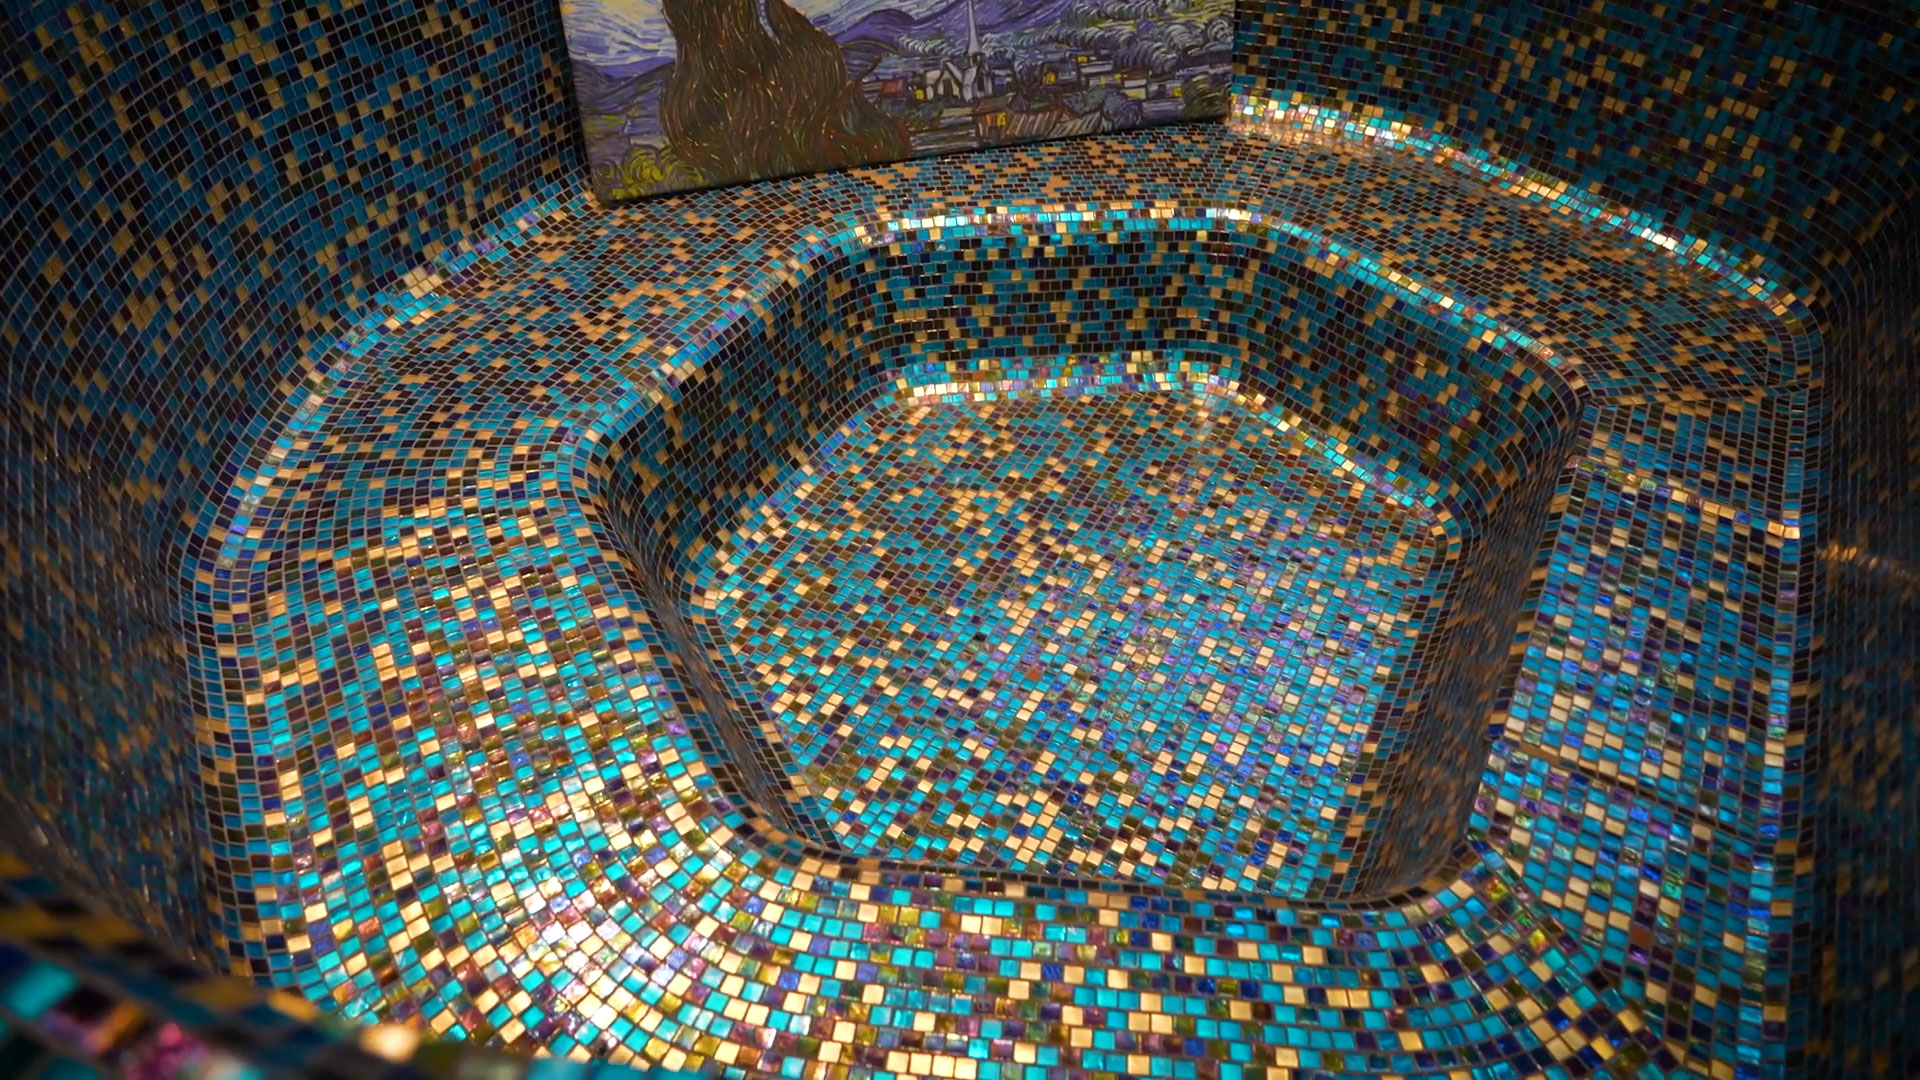 Pool prefabricated pool with mosaic tiles